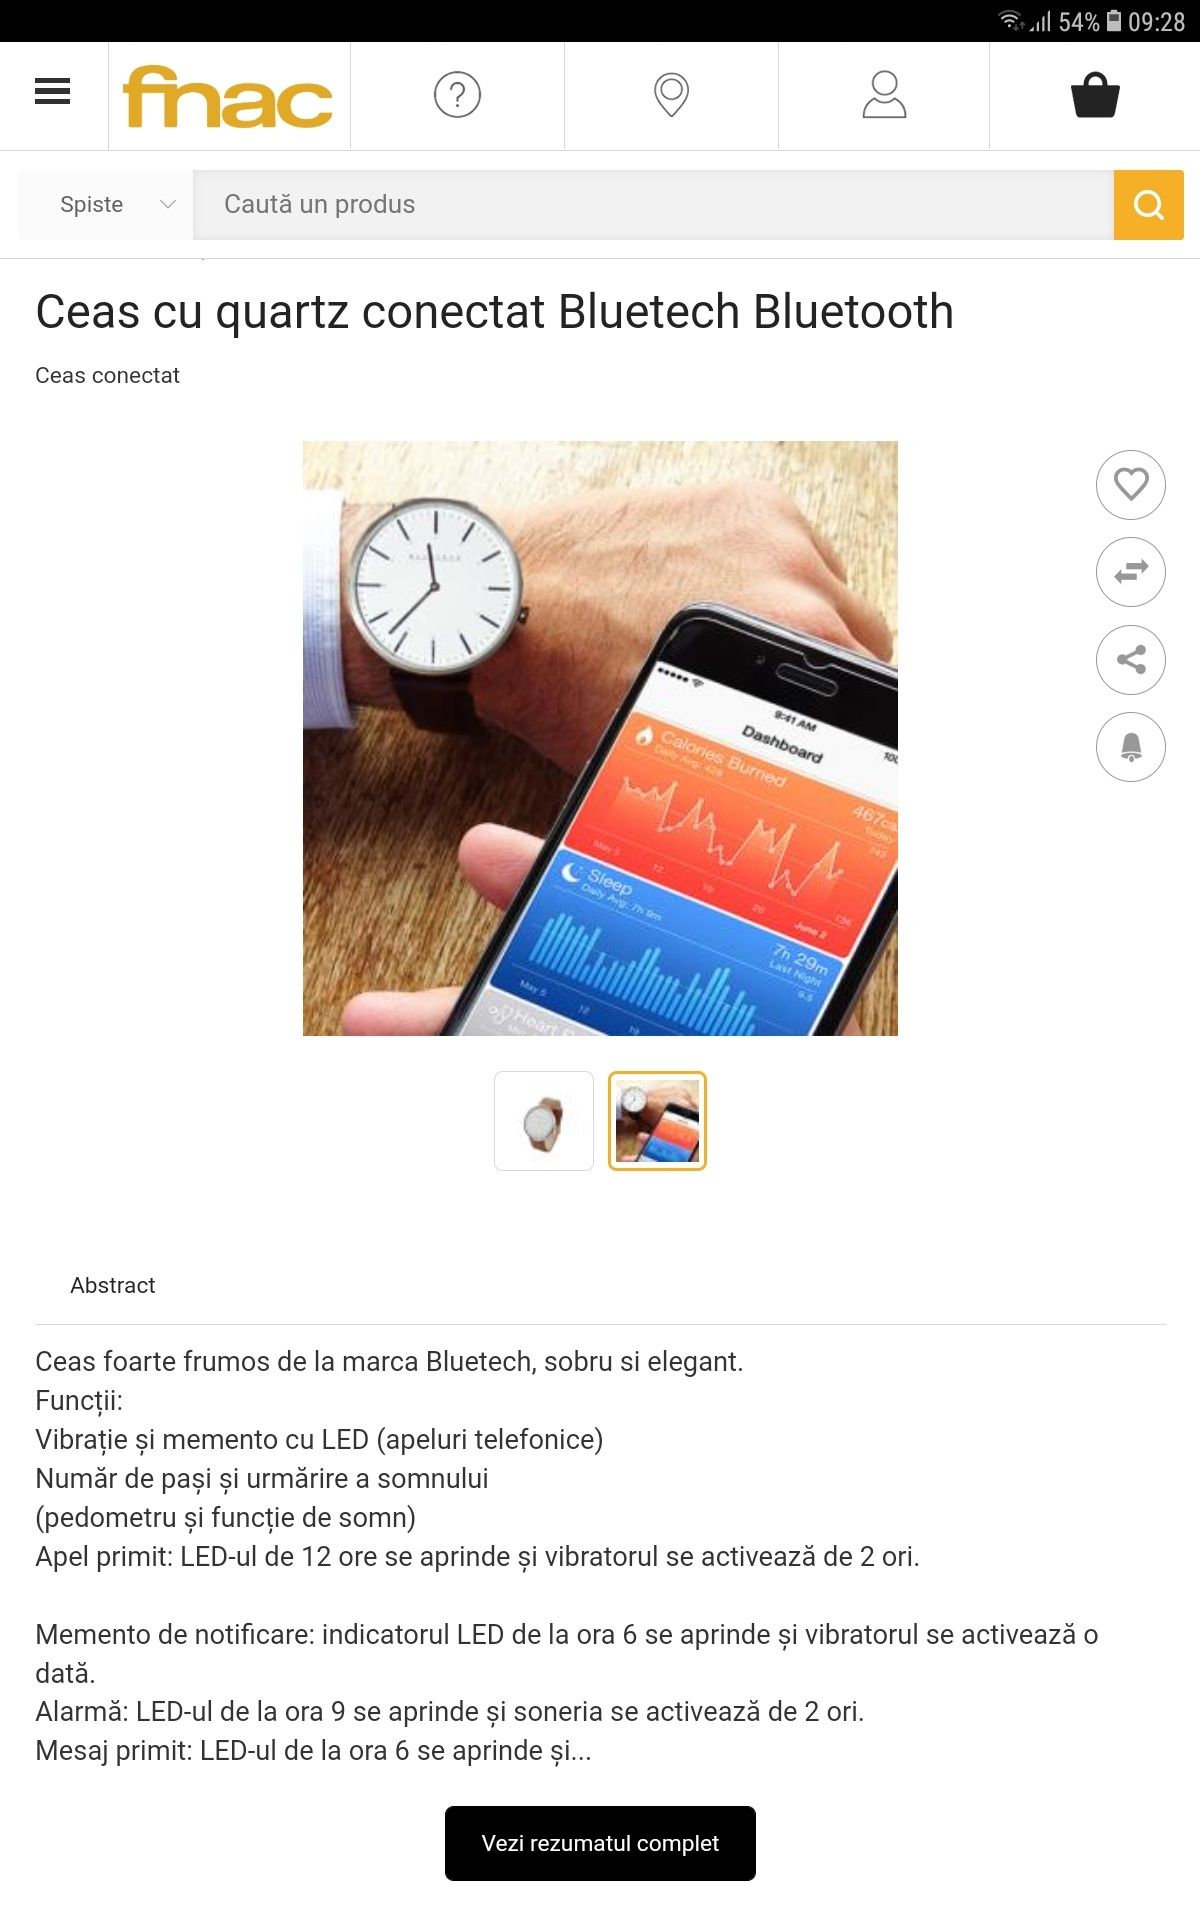 Ceas Bluetech bluetooth smartwatch